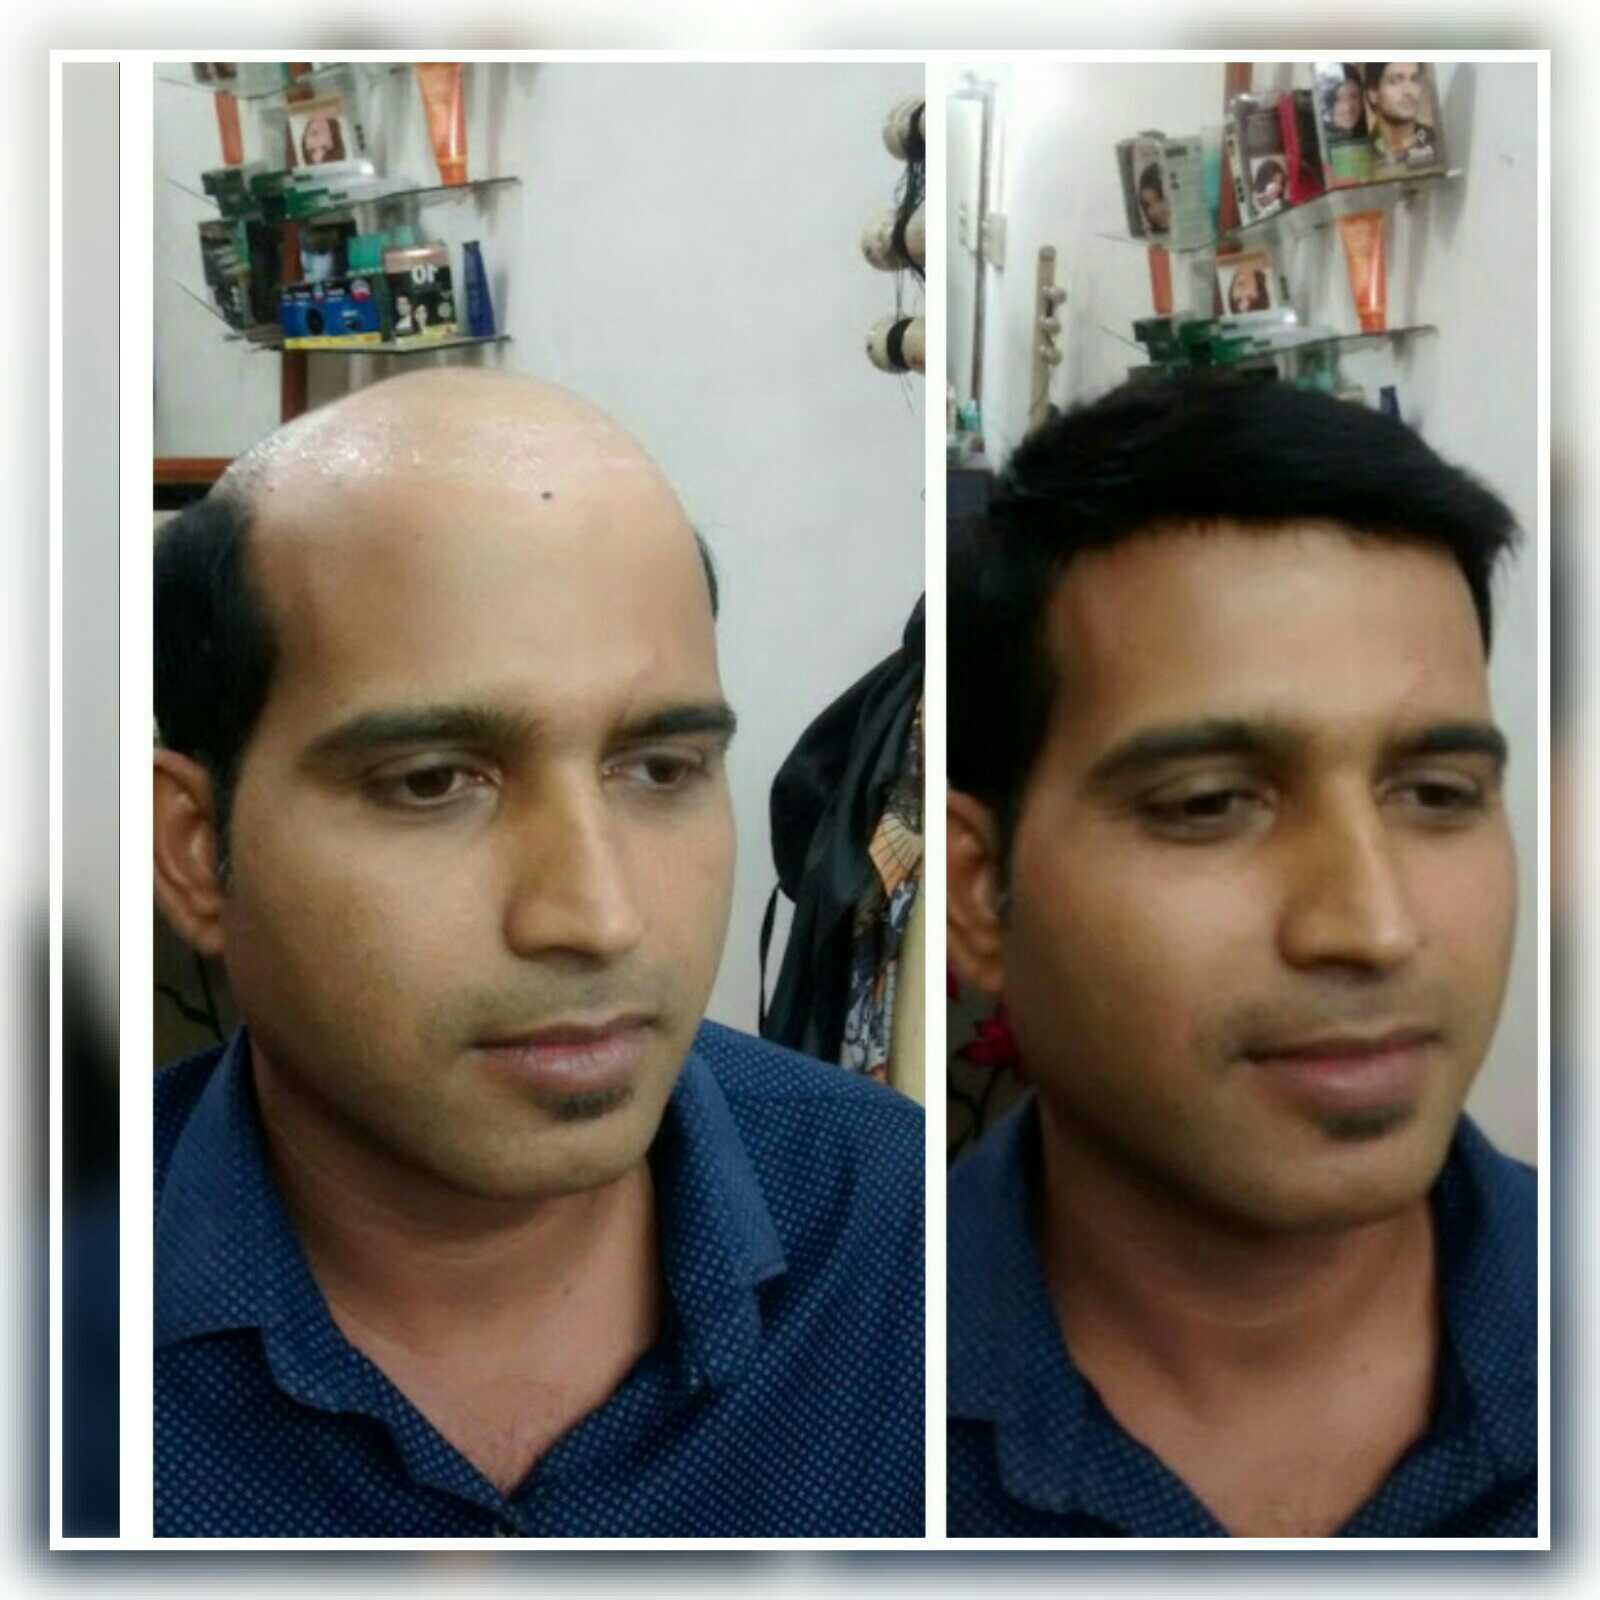 Hair Fixing Services in Mangalore, Bald Treatment | Sulekha Mangalore